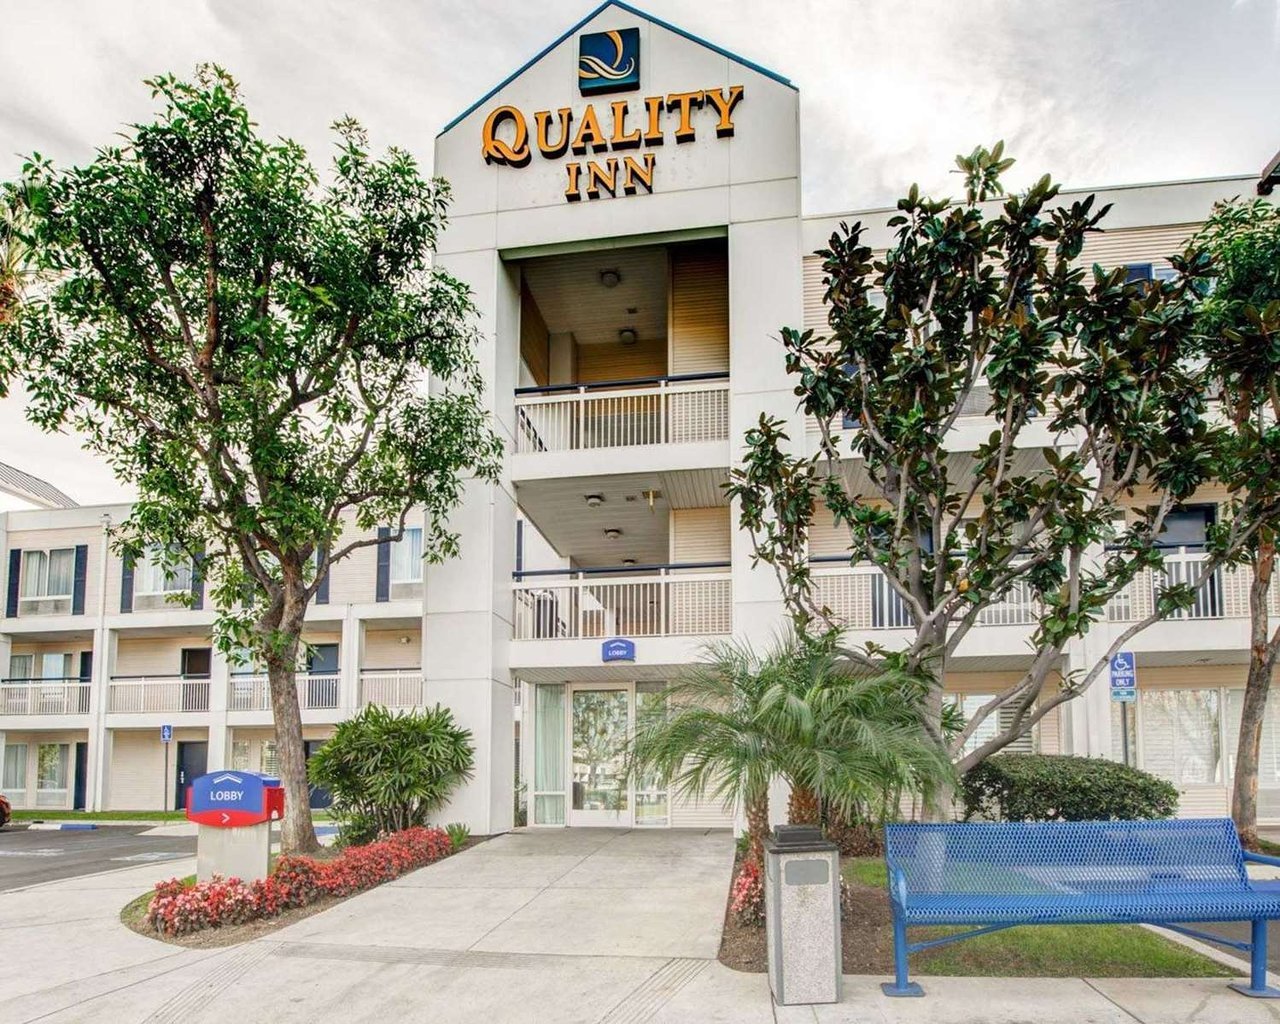 Photo of Quality Inn Placentia Anaheim Fullerton, Placentia, CA